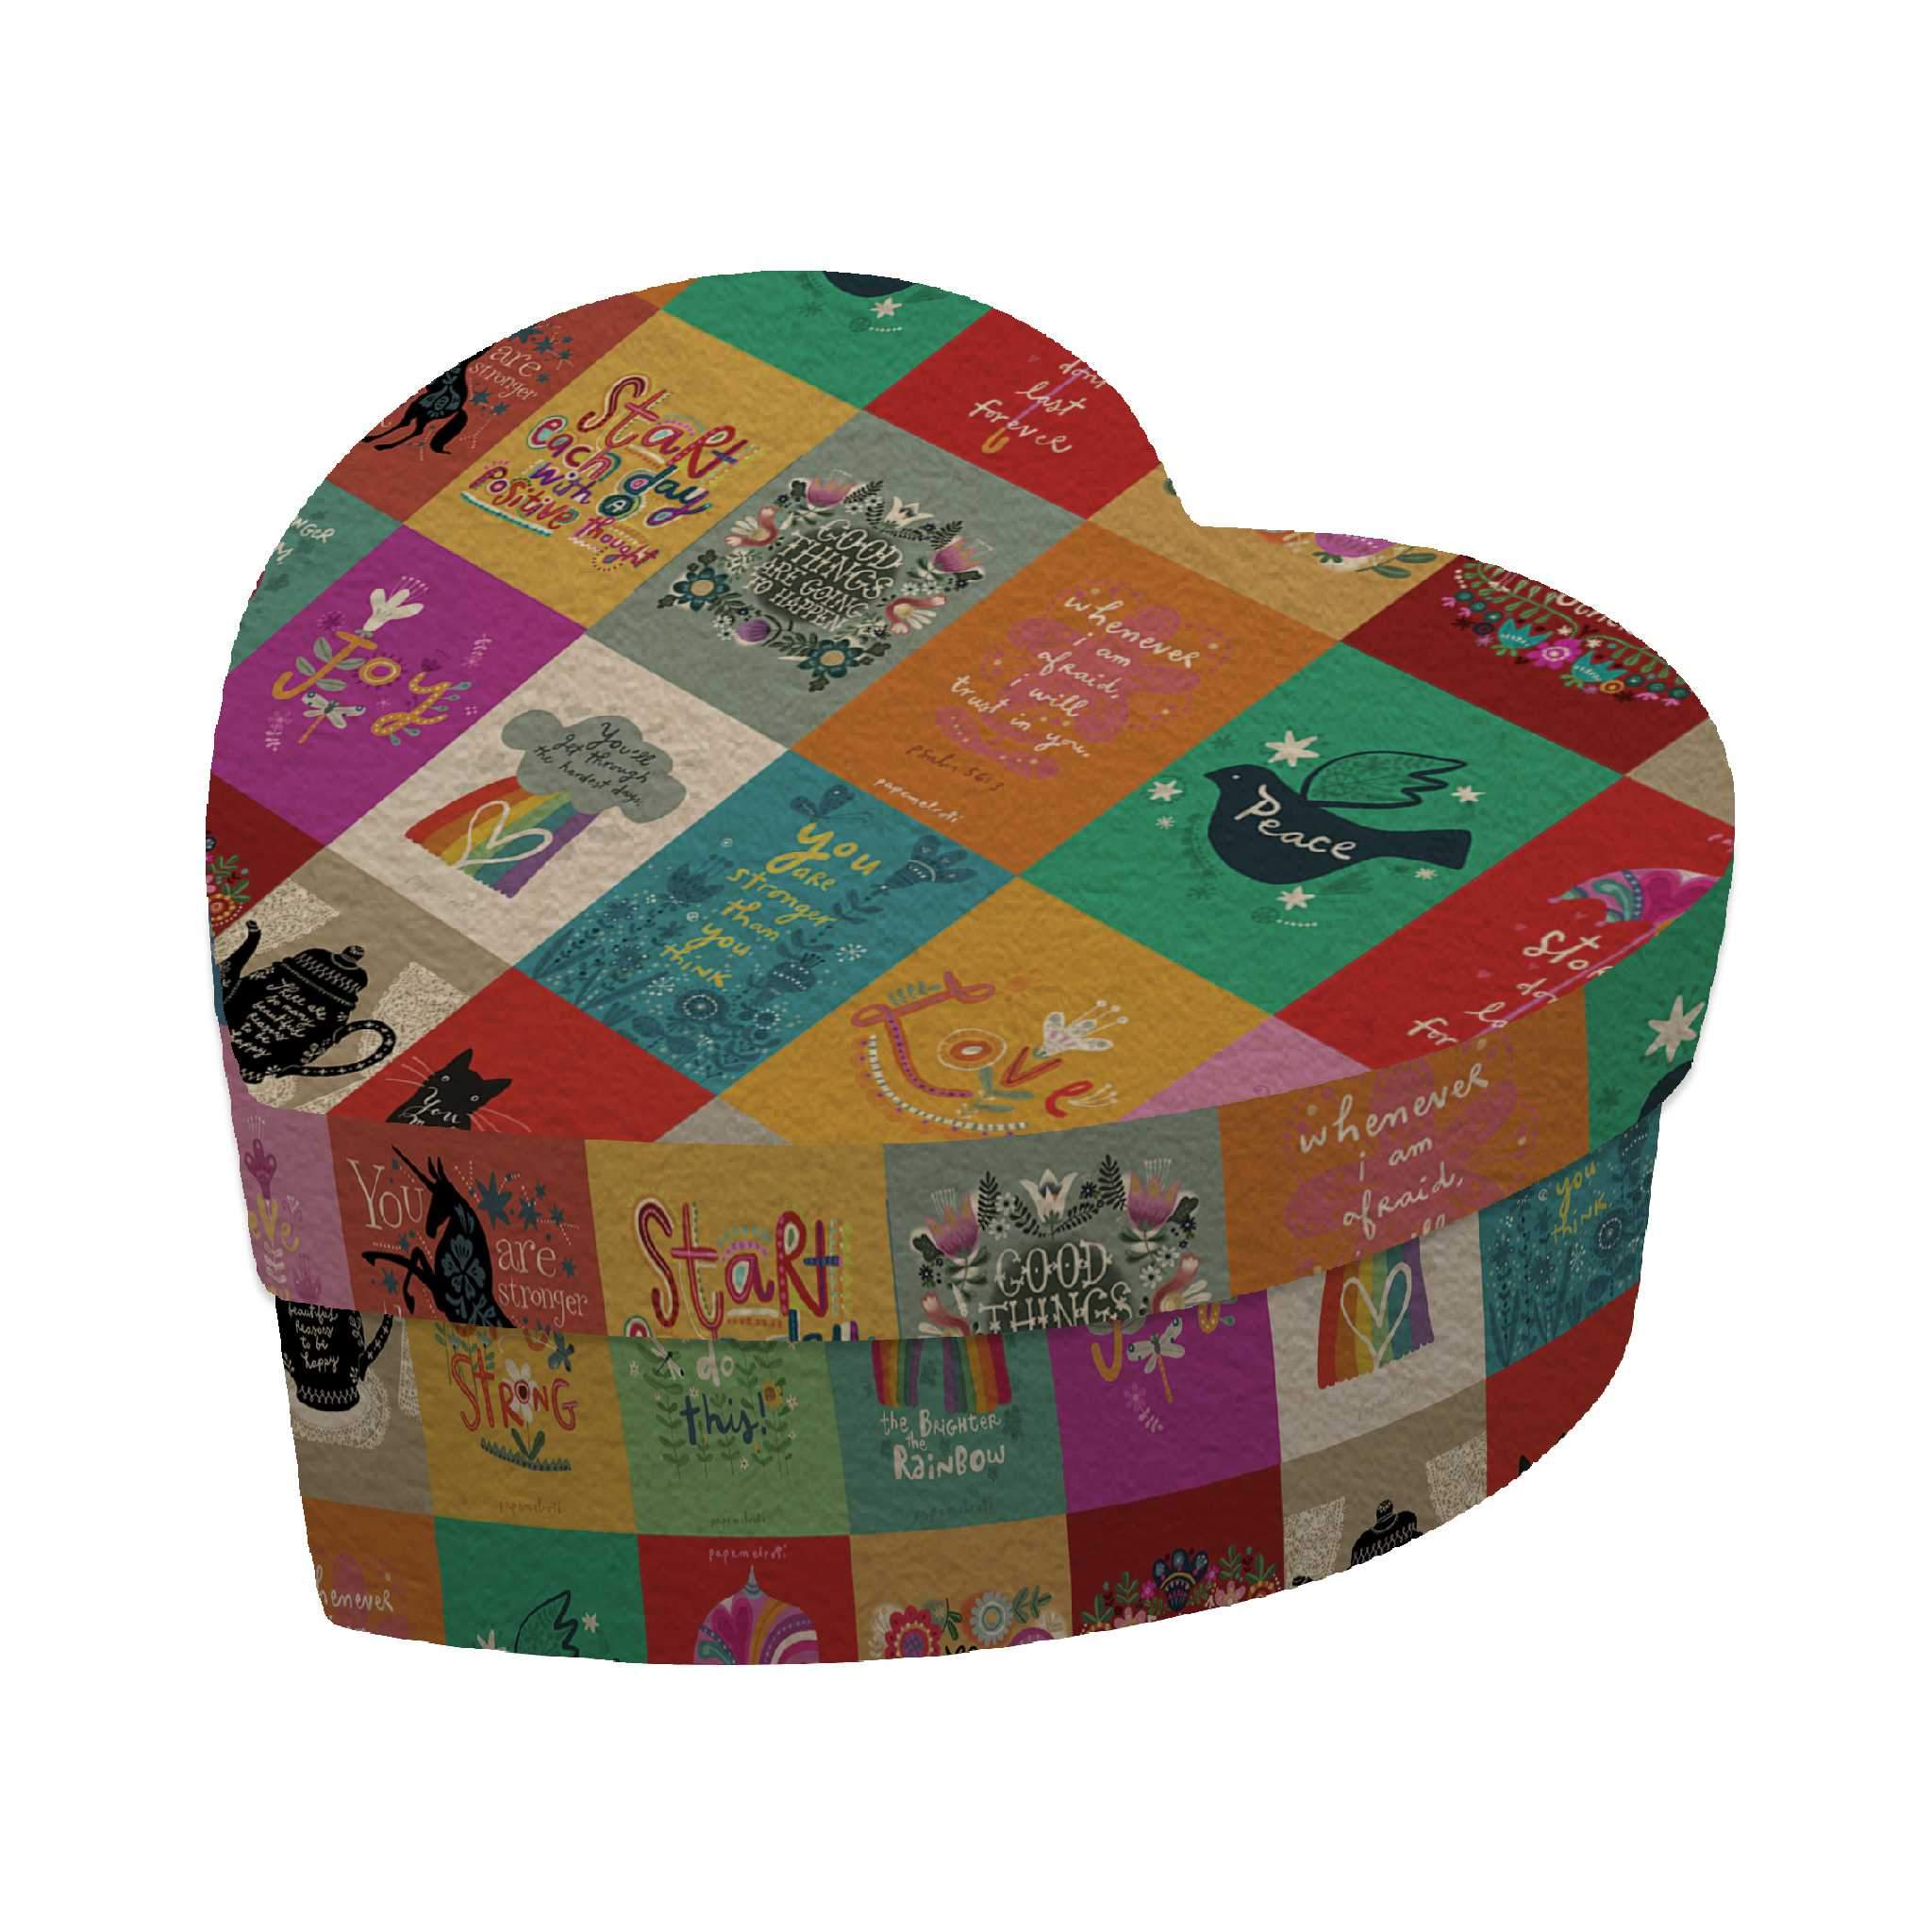 Affirmation Heart Gift Box